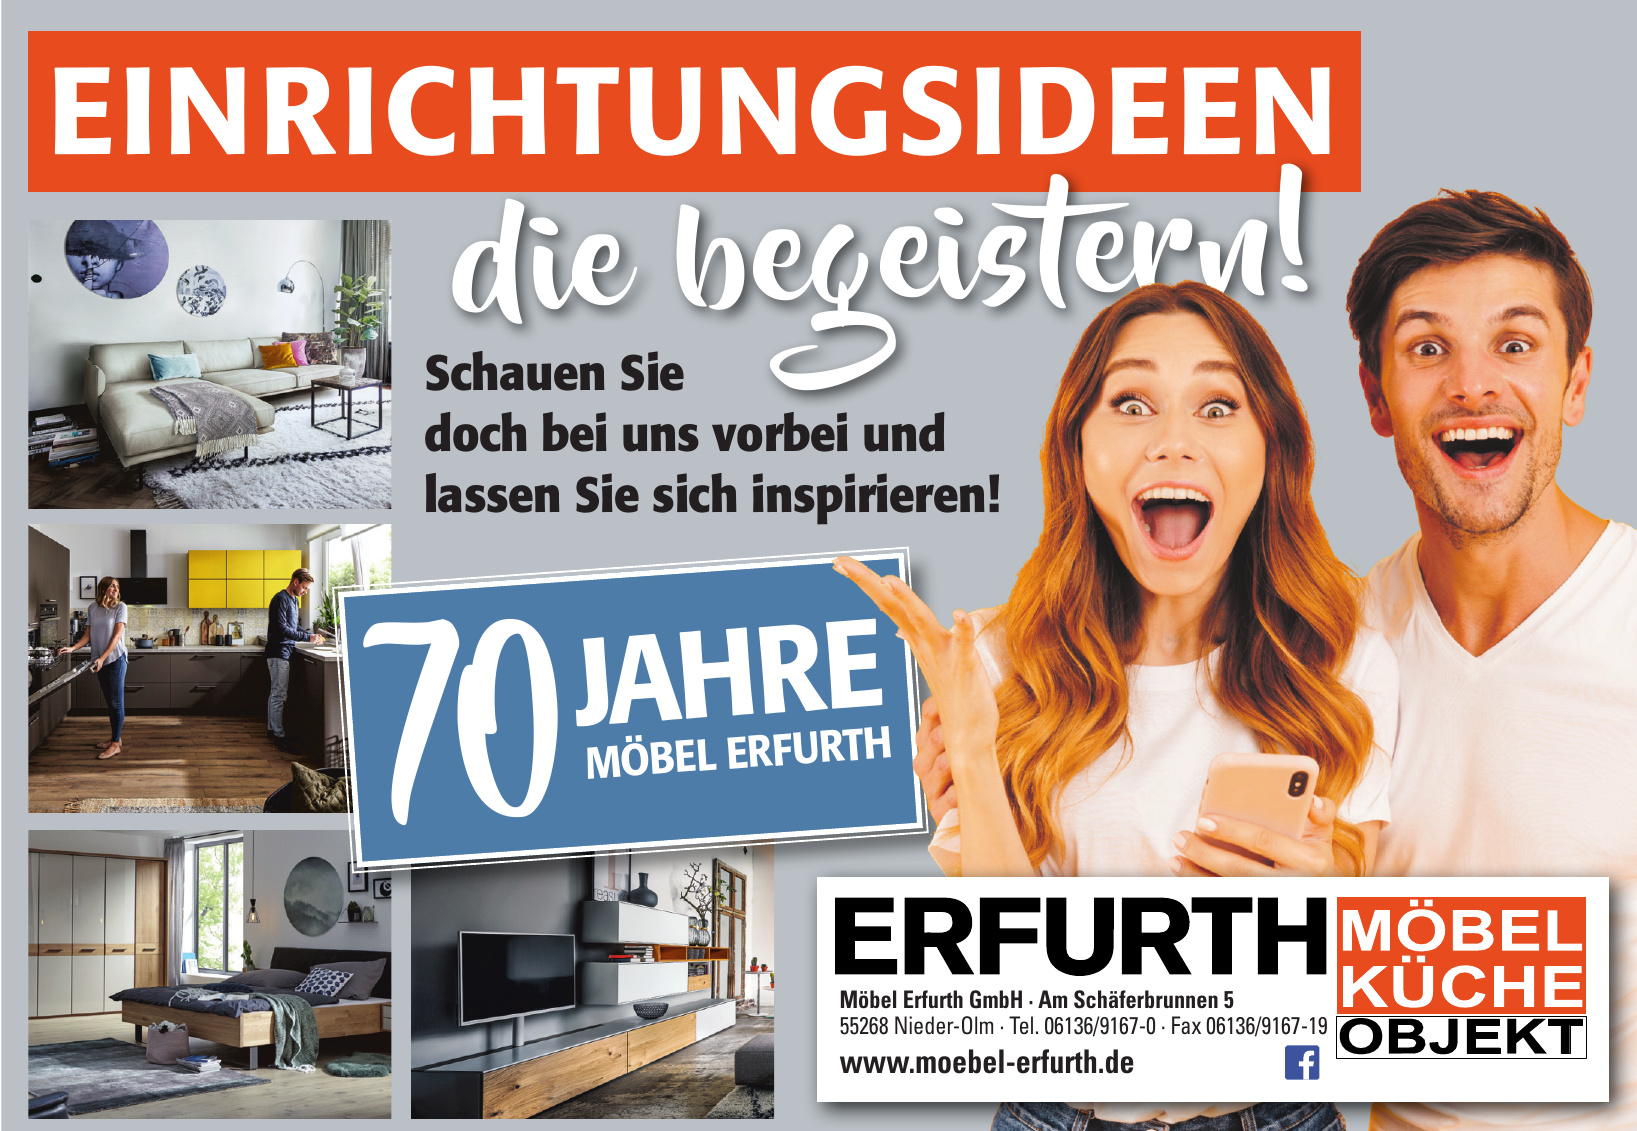 Möbel Erfurth GmbH